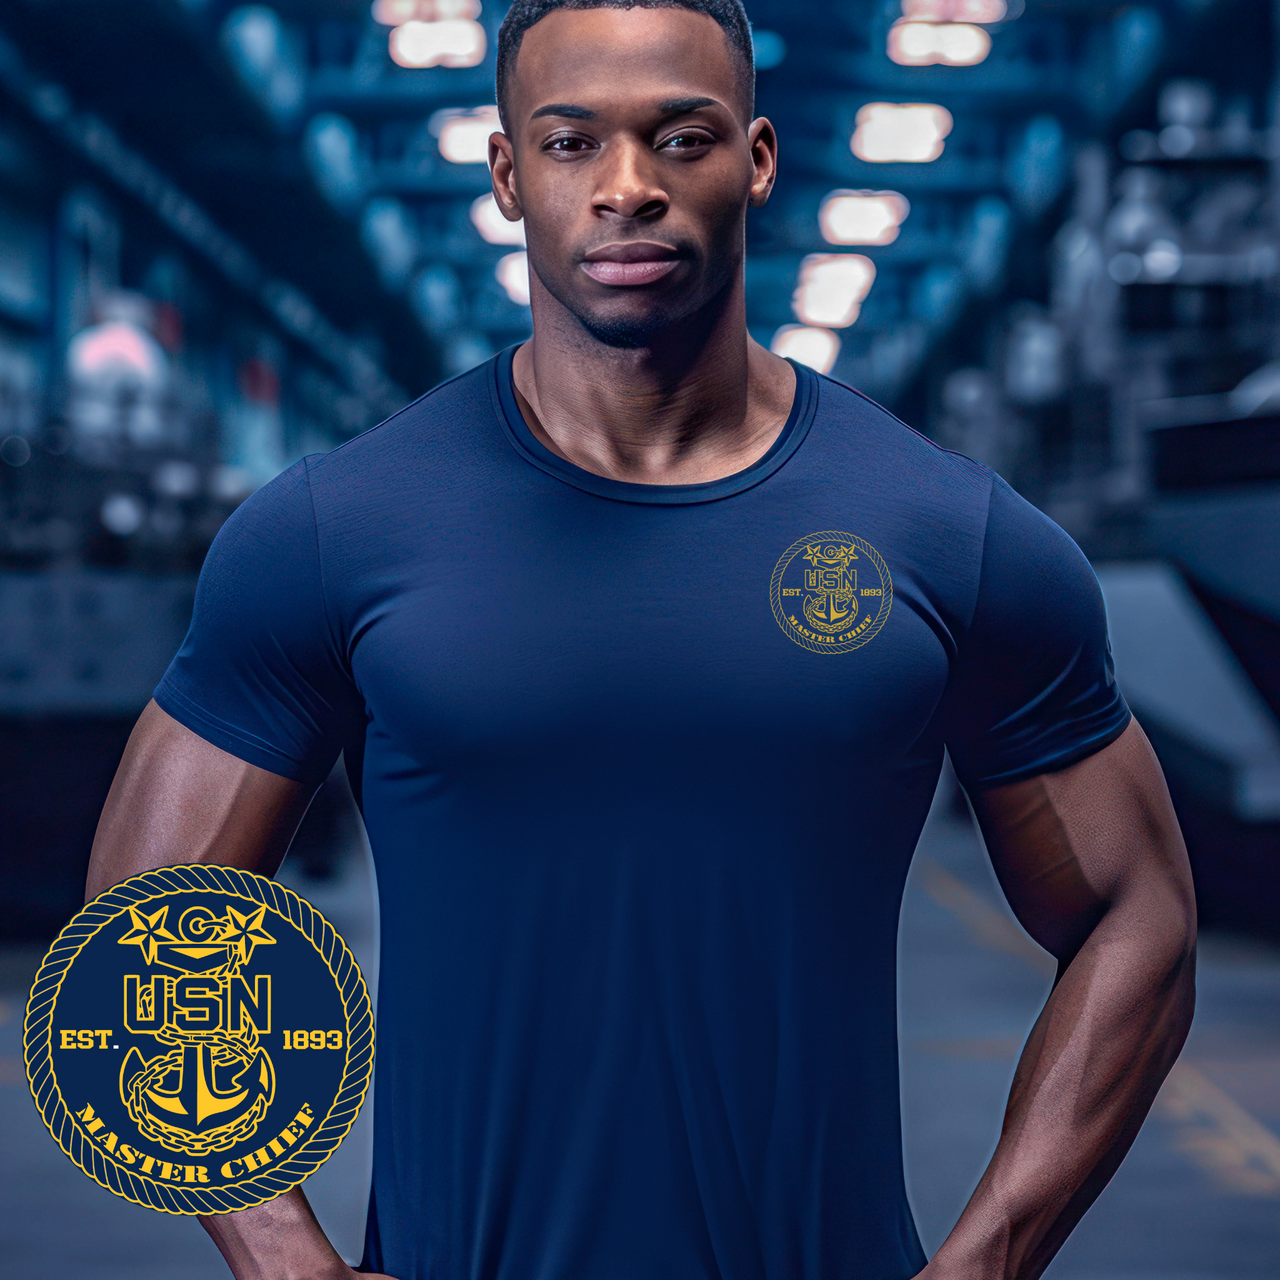 Navy Master Chief T-shirt